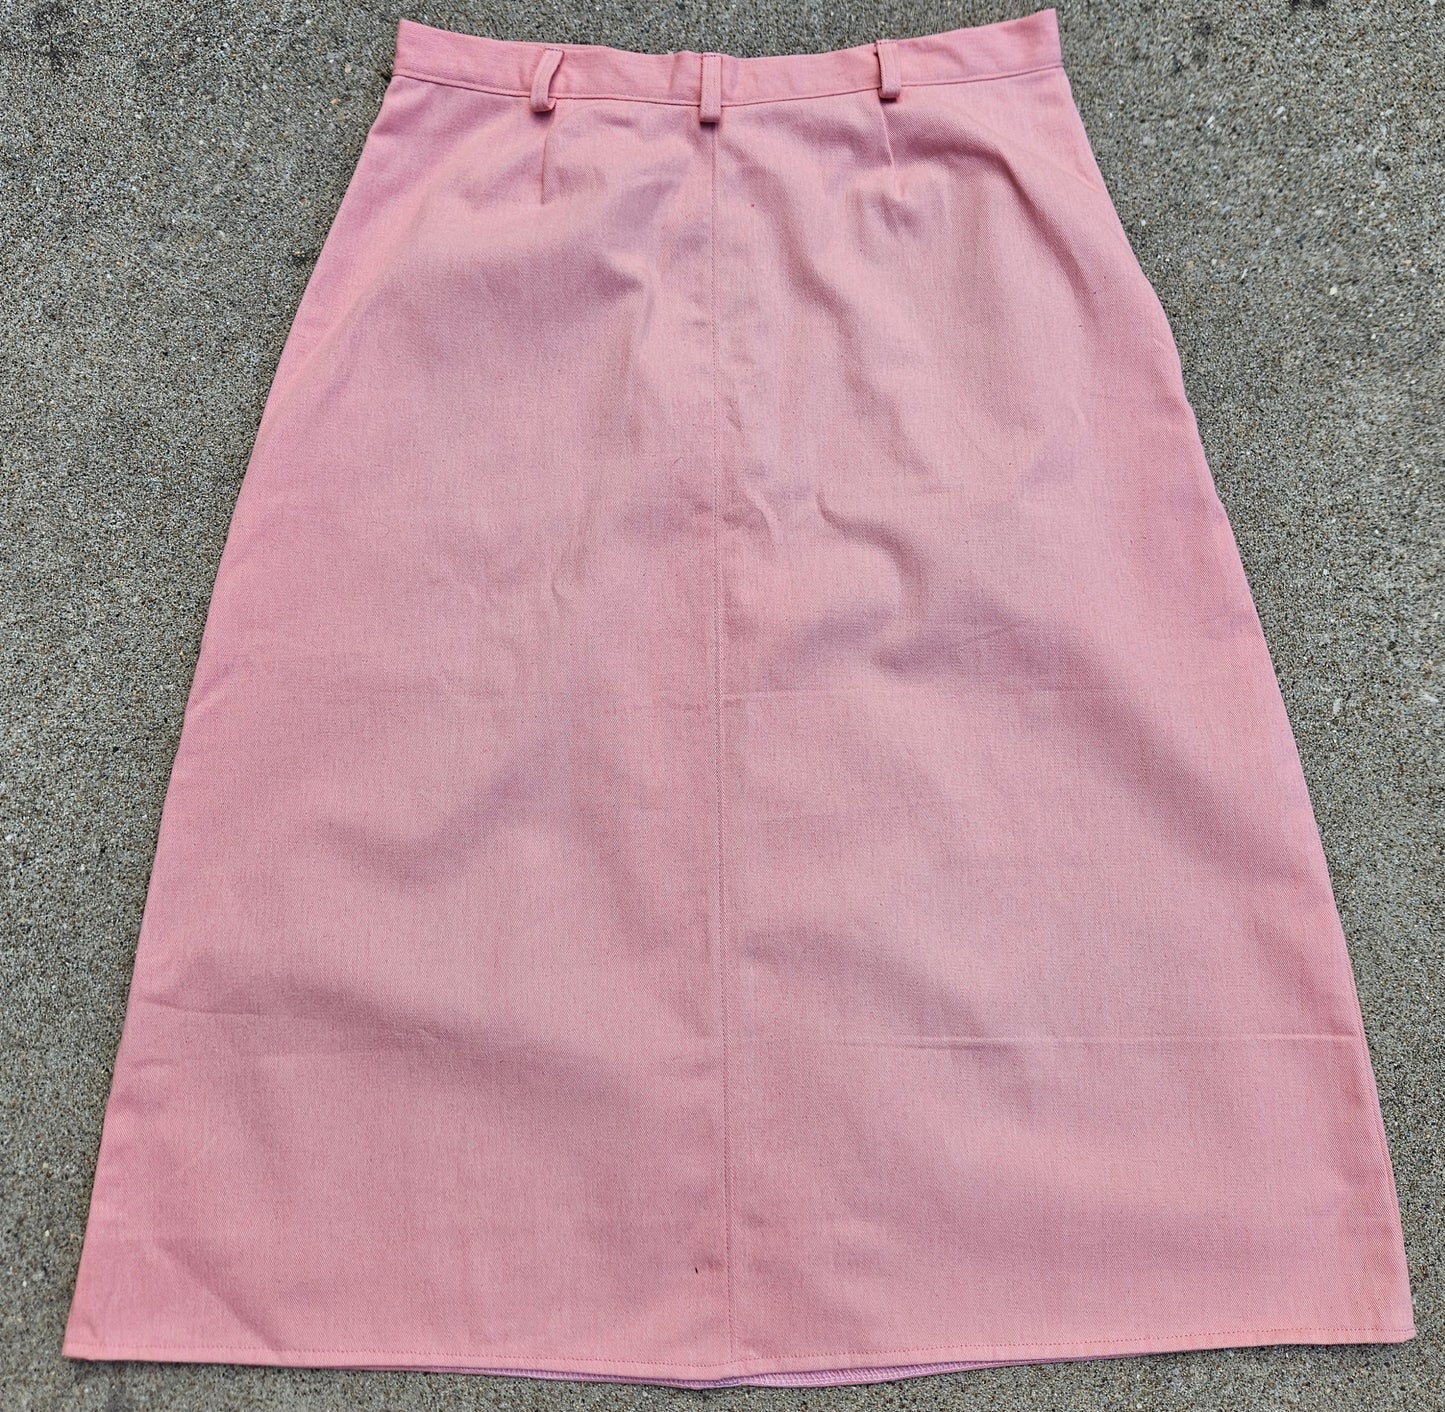 Adult Calf Length Pink/peach Denim Skirt Size 12